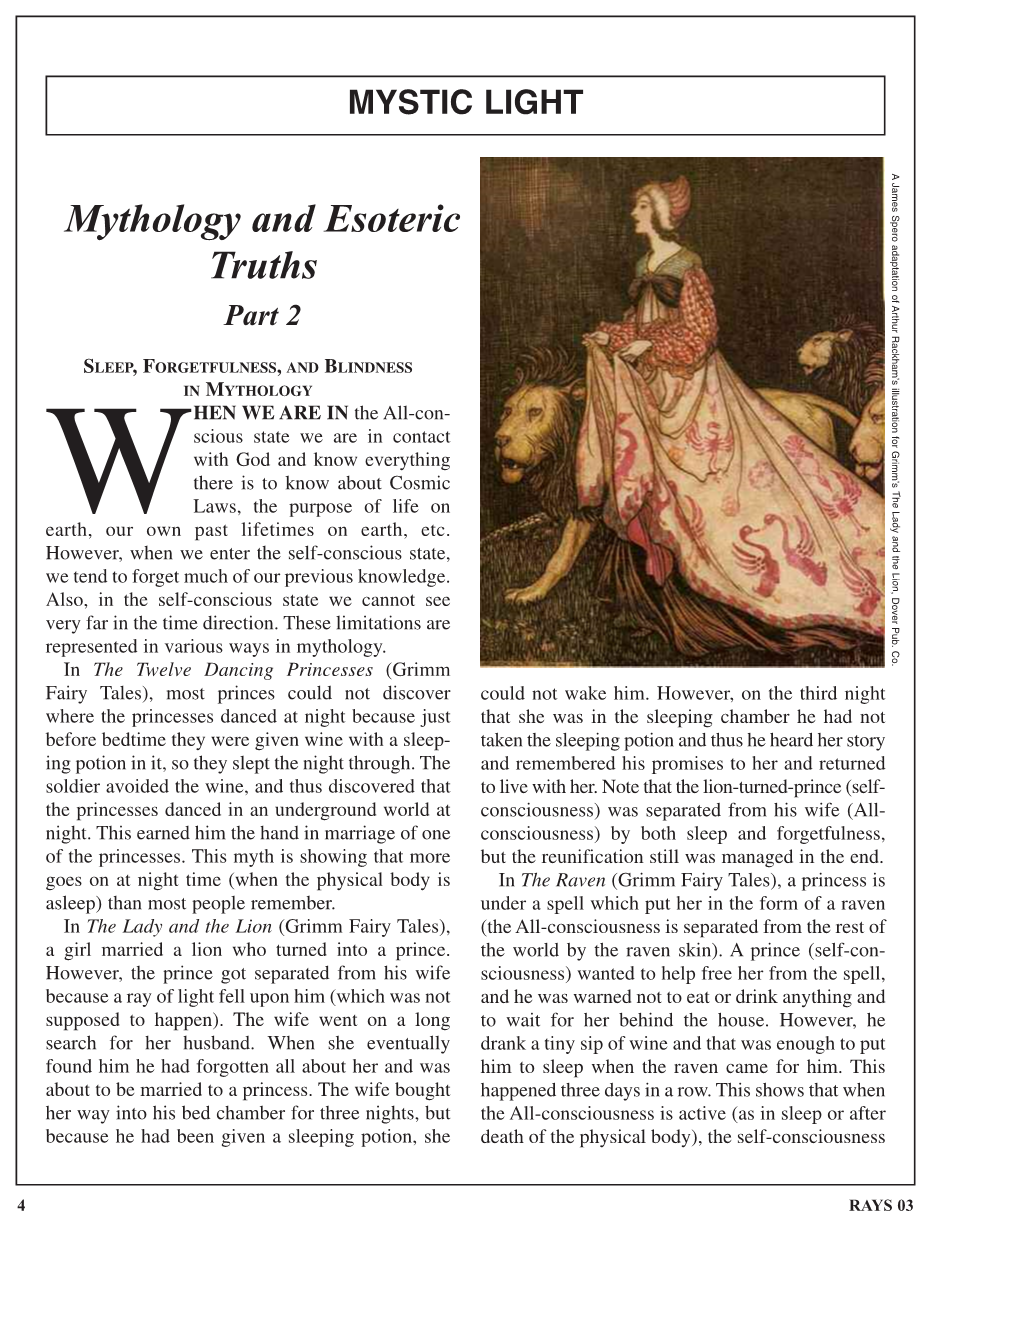 Mythology and Esoteric Truths